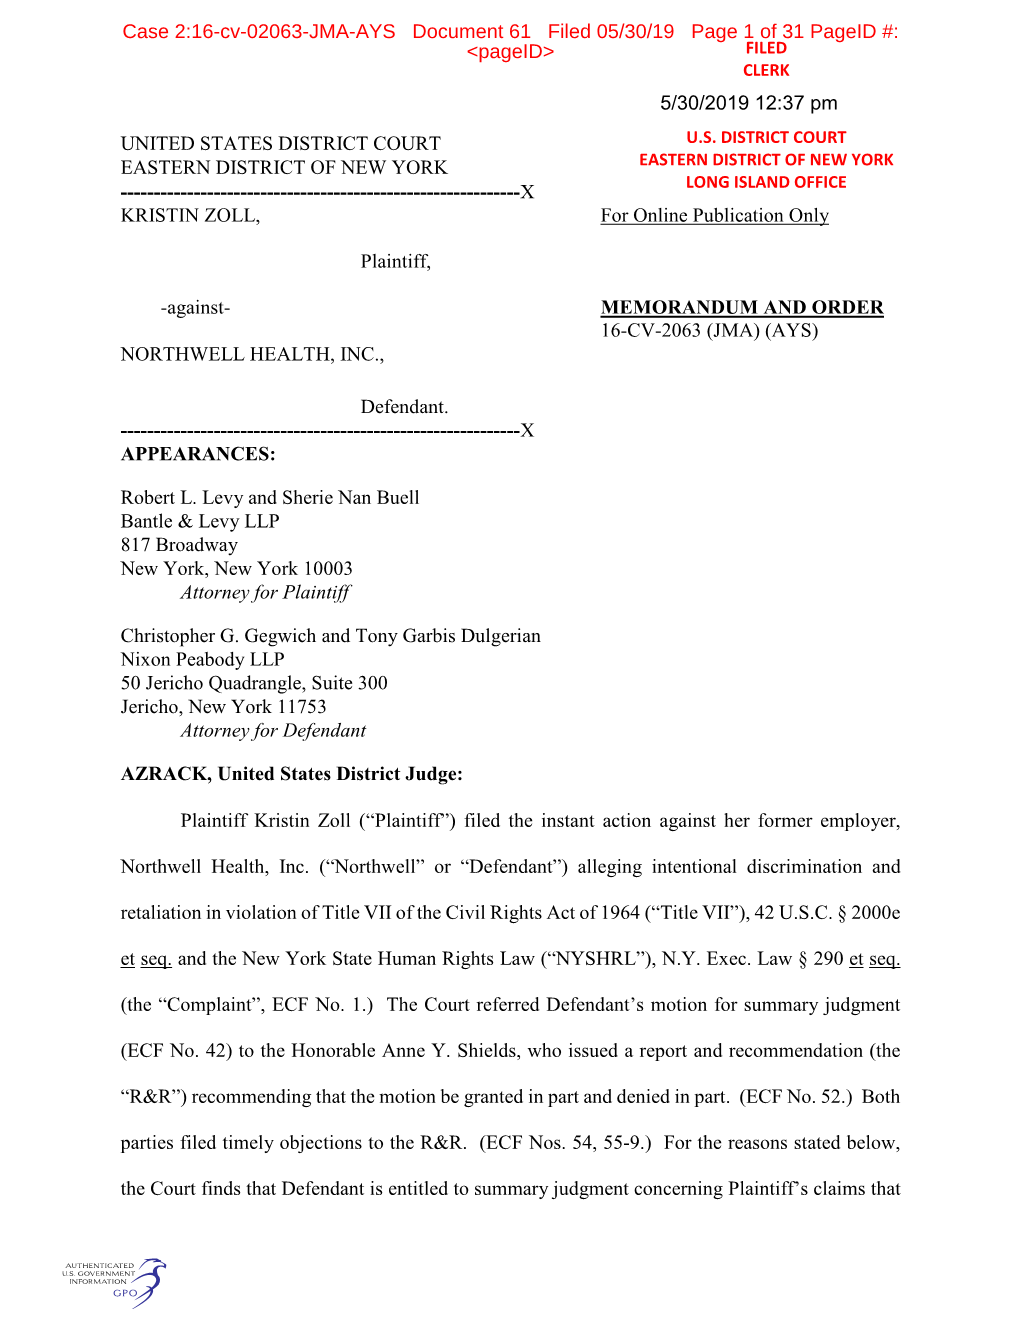 Case 2:16-Cv-02063-JMA-AYS Document 61 Filed 05/30/19 Page